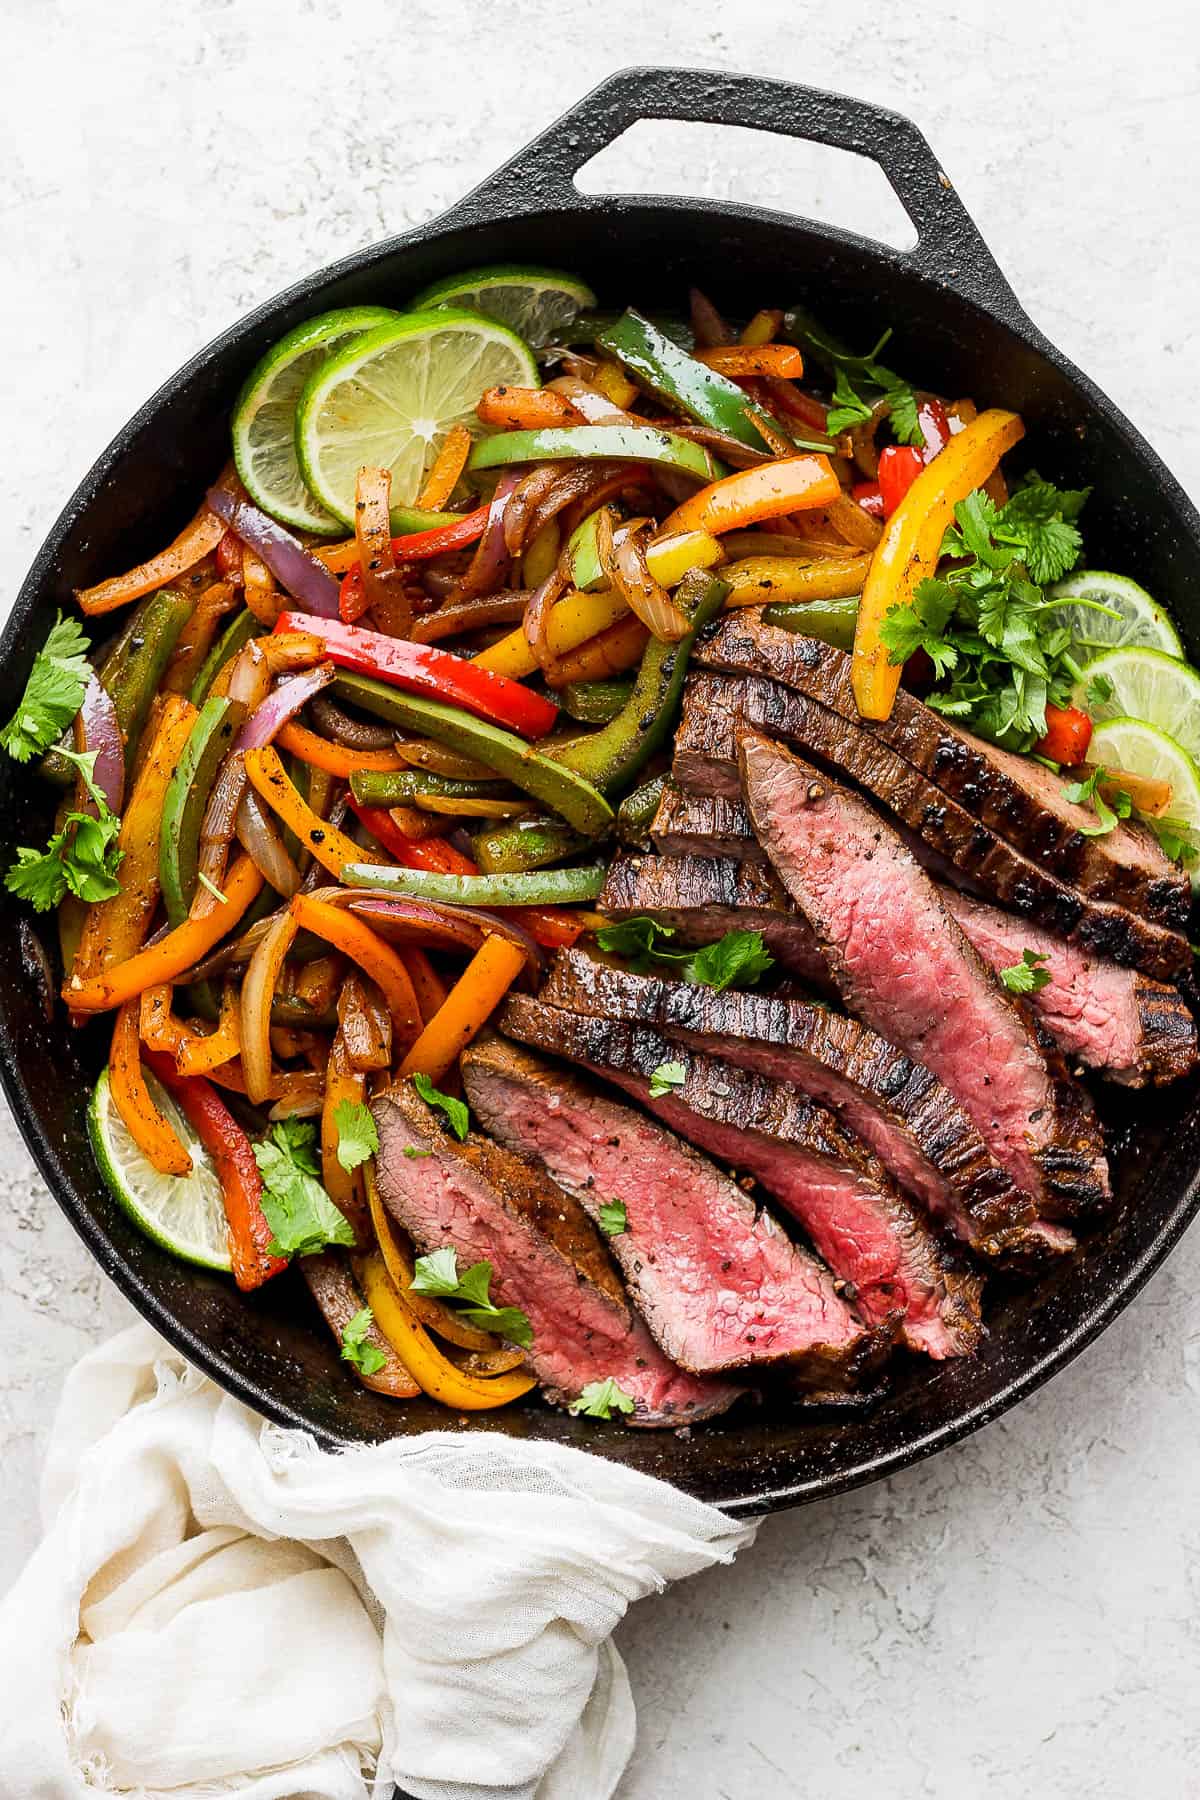 Strips of fajita steak and veggies in a cast iron skillet.